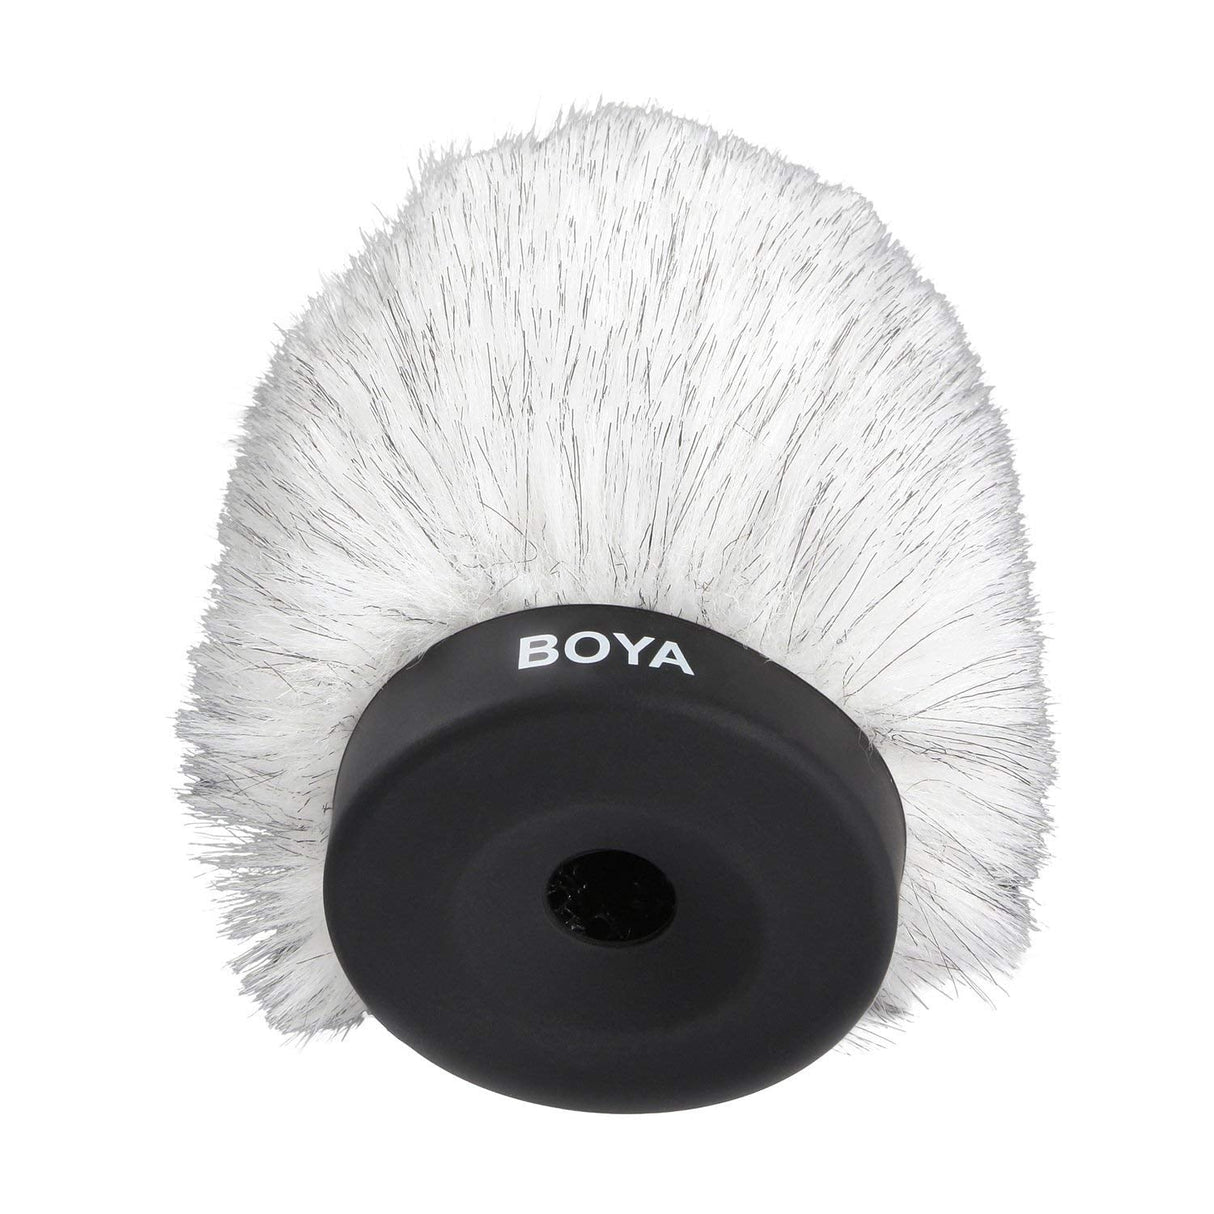 BOYA BY-P120 Furry Outdoor Interview Windshield Muff for Shotgun Capacitor Microphones (Inside Depth 4.8'')